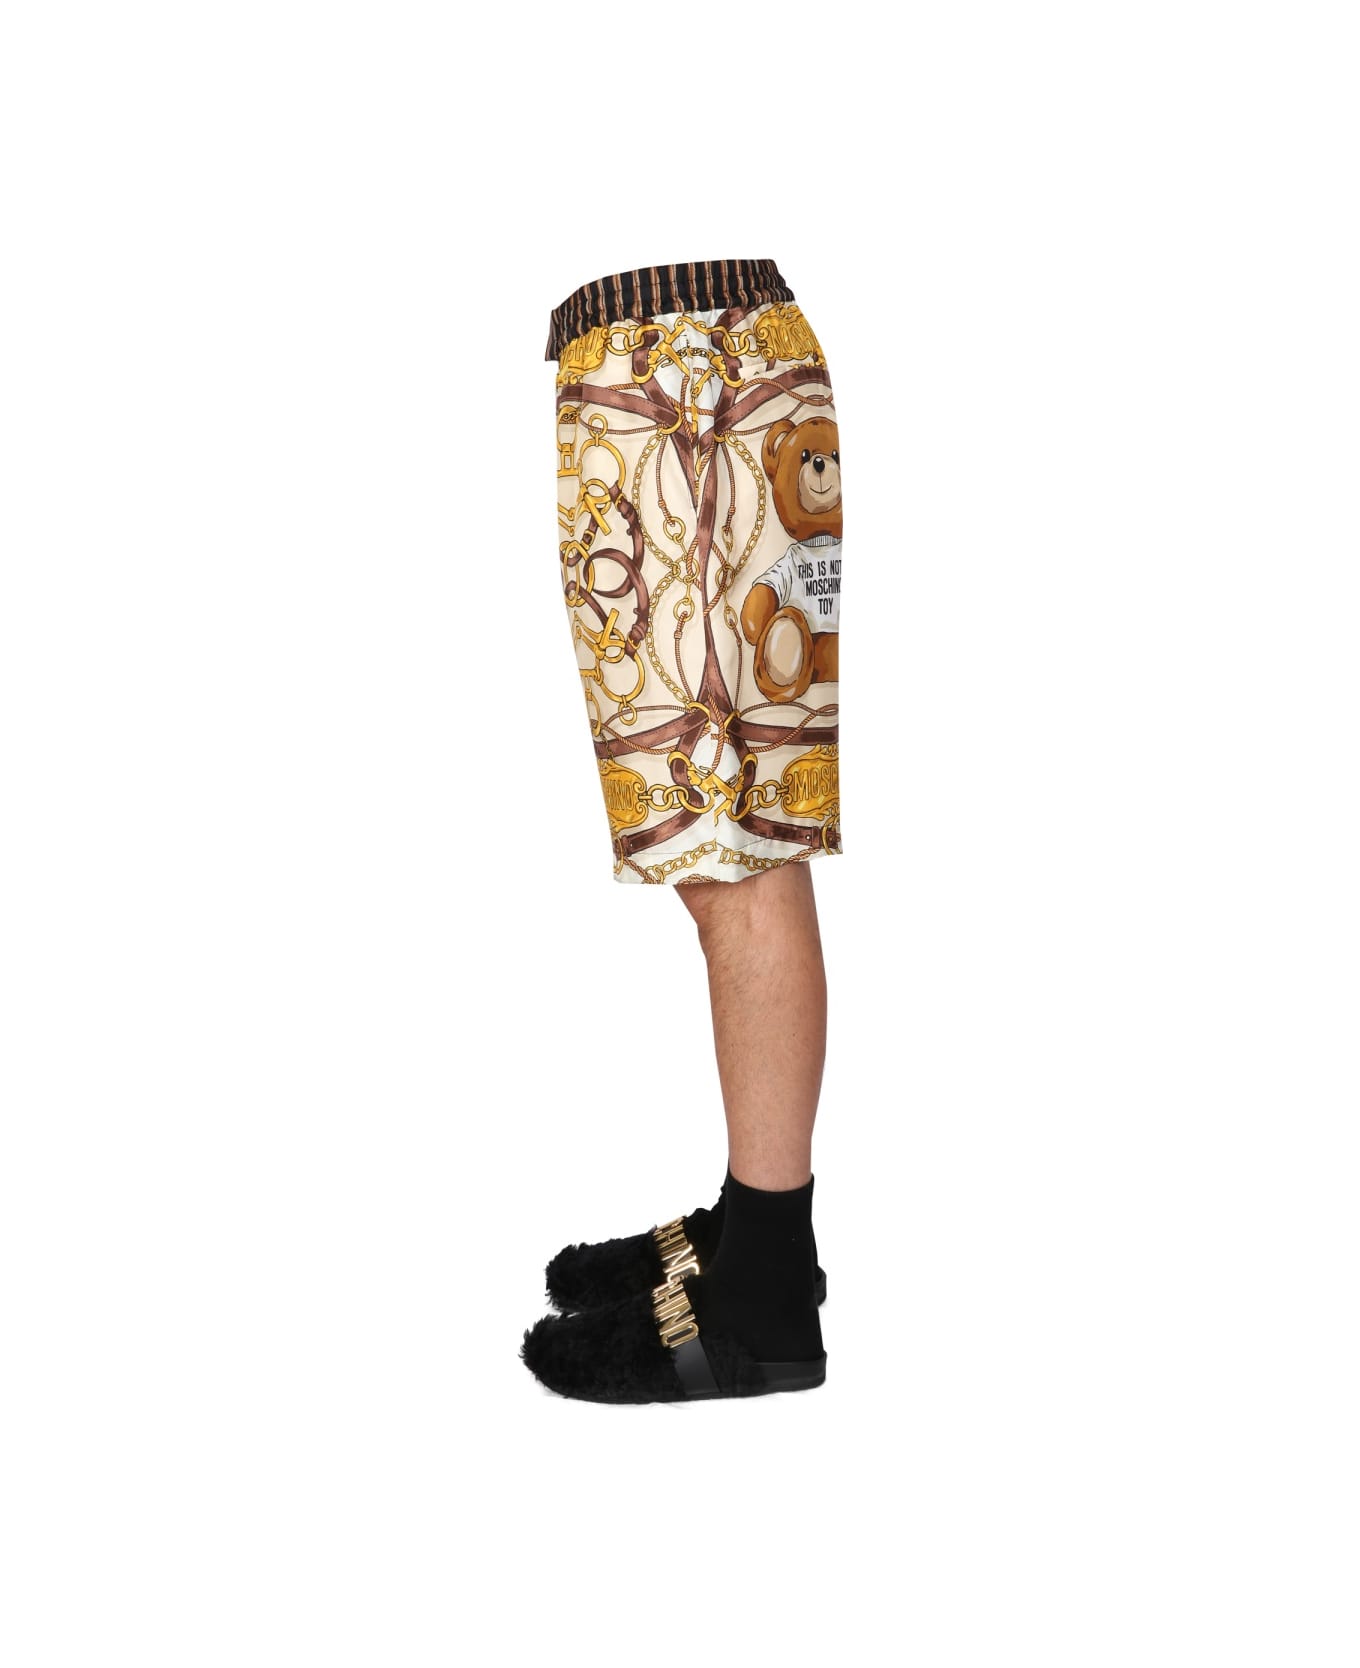 Moschino "teddy" Bermuda Shorts - MULTICOLOUR